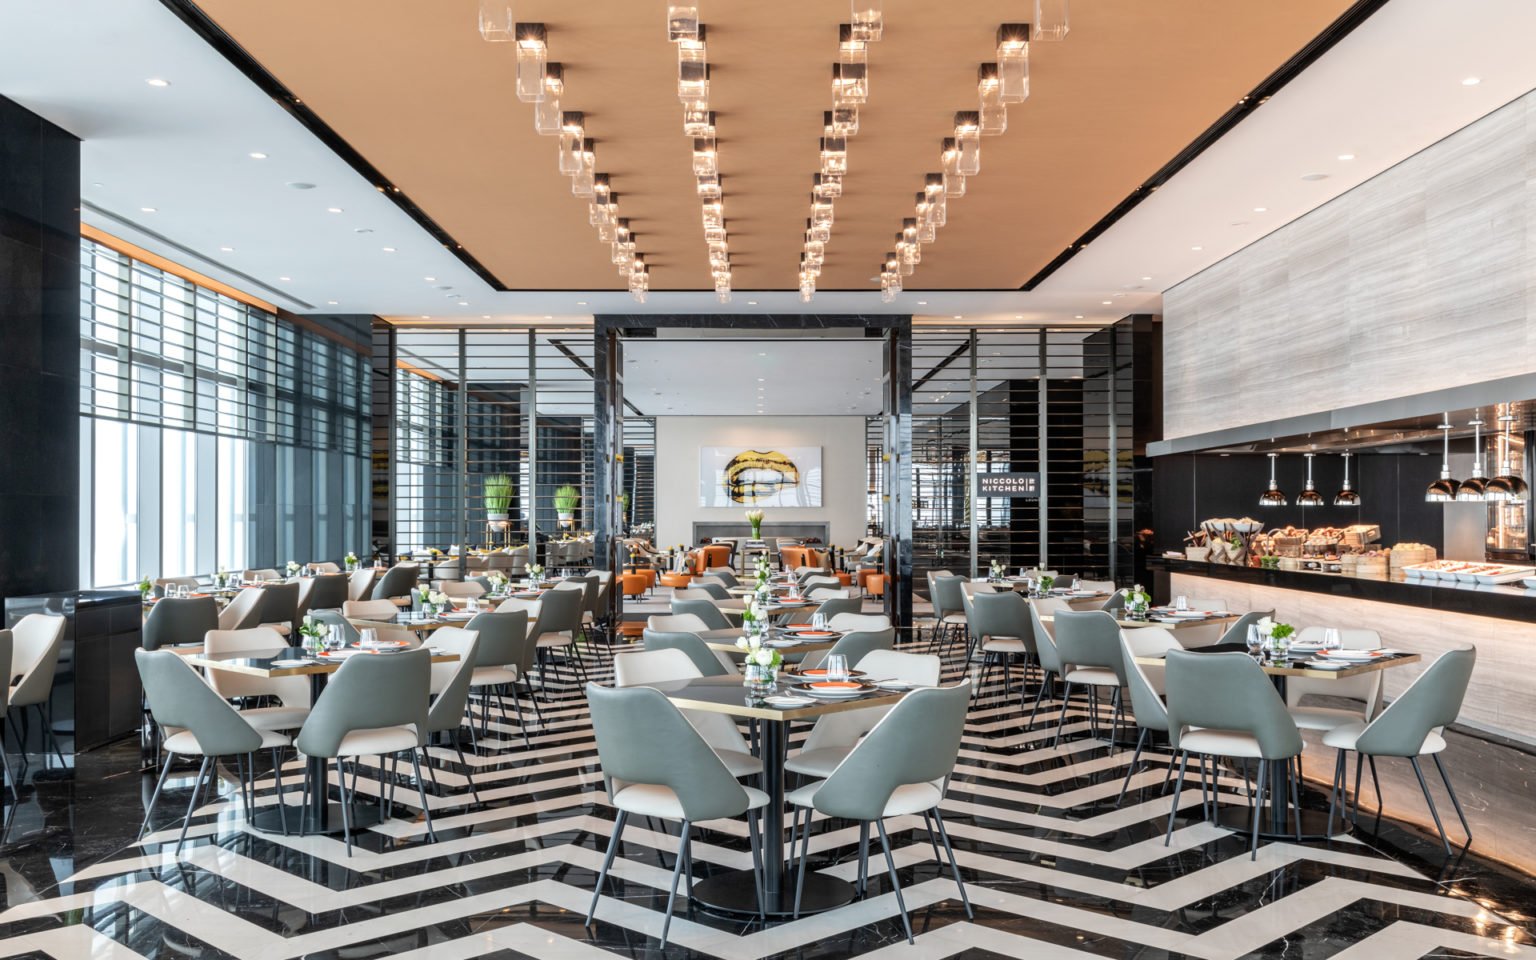 Niccolo Hotel Changsha, China - Hotel Interior Design on Love That Design